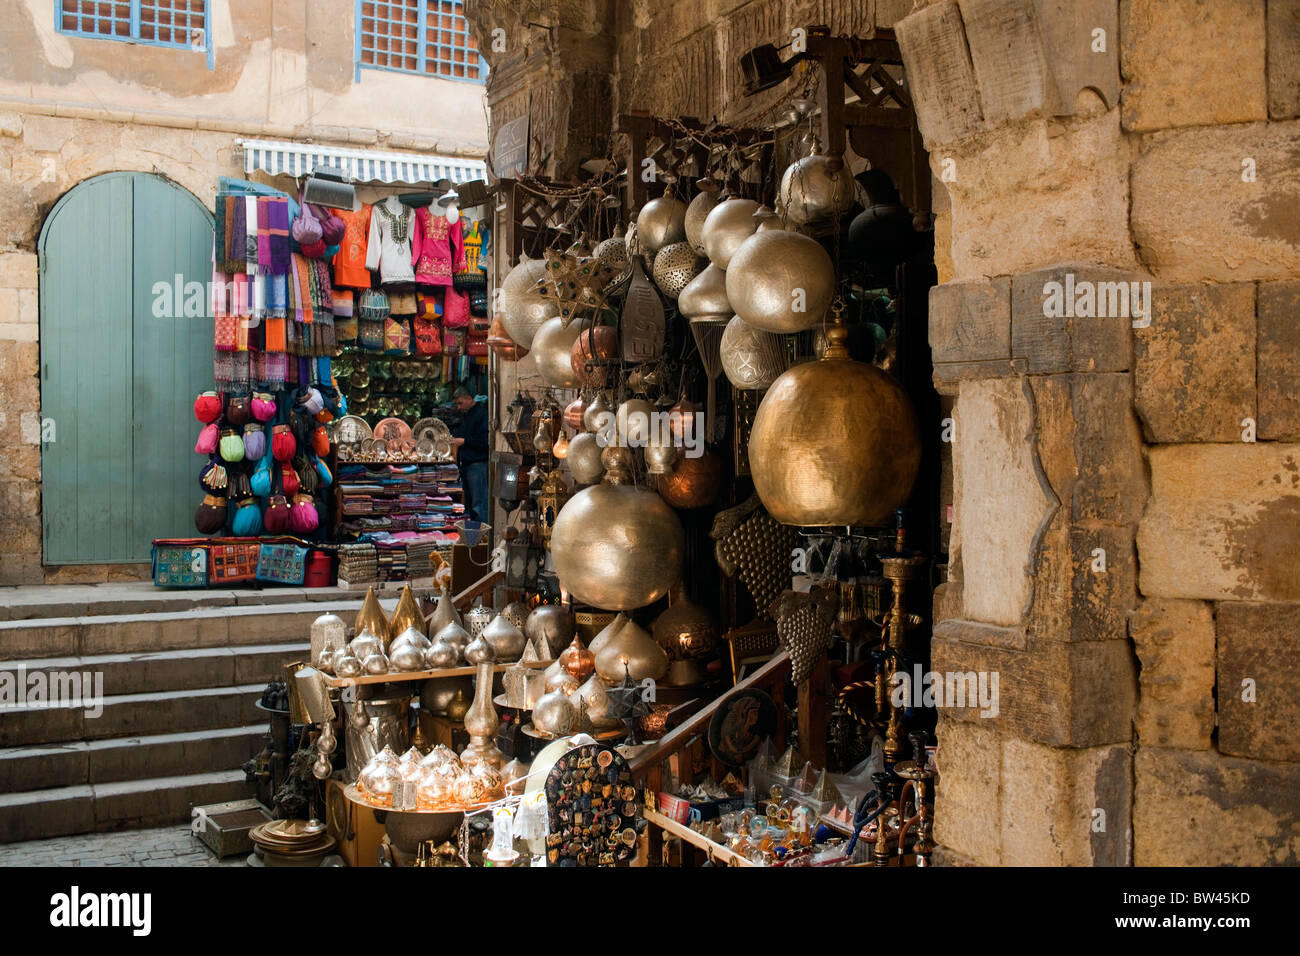 Aegypten, Kairo, im zoco de Khan el Khalili, Foto de stock